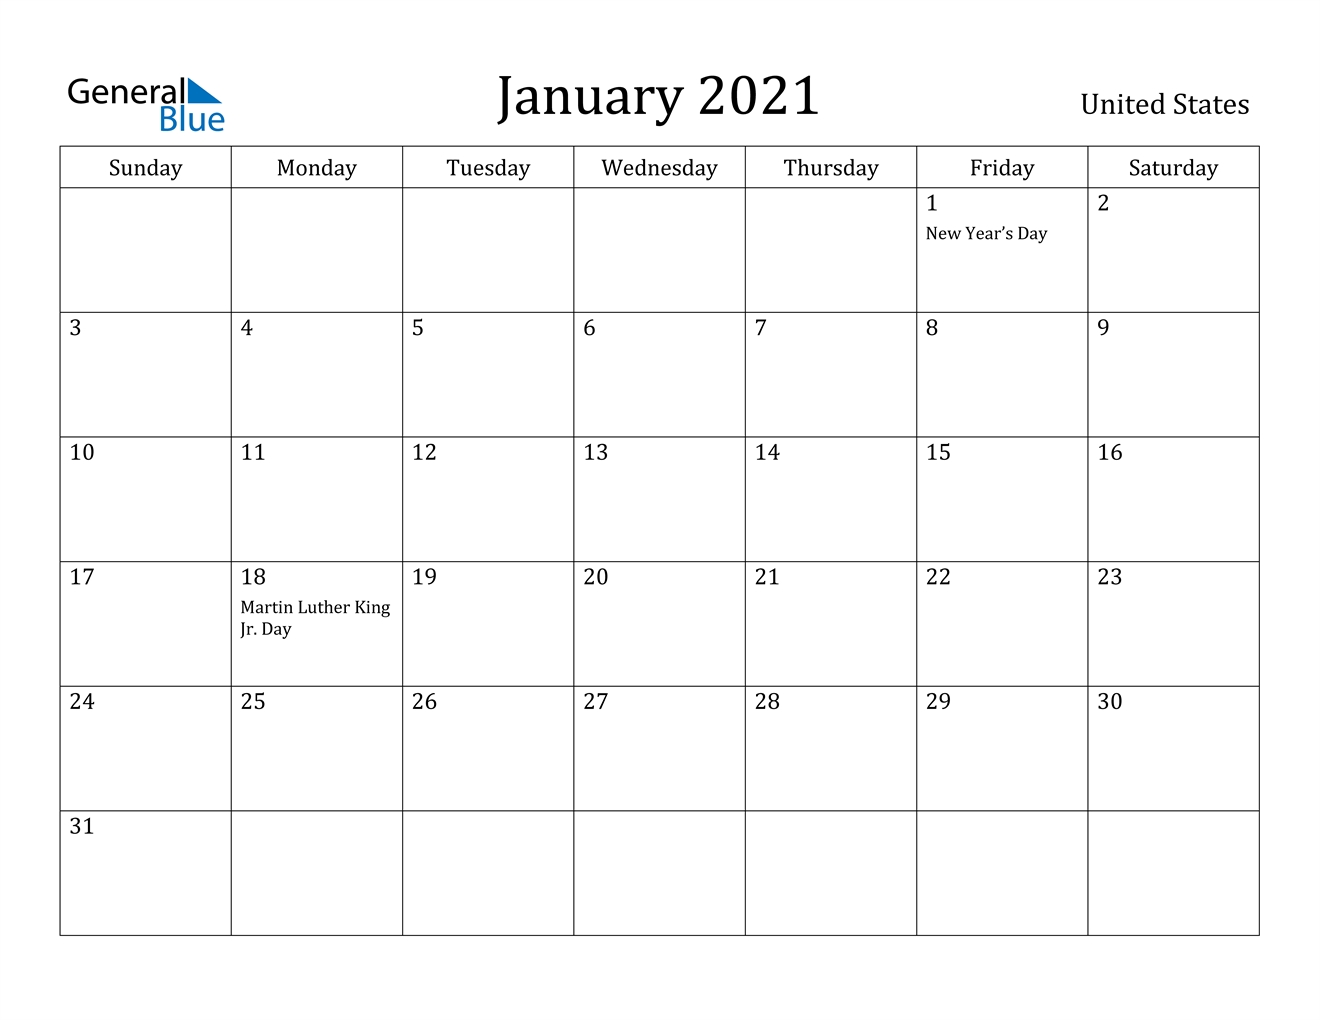 January 2021 Calendar - United States